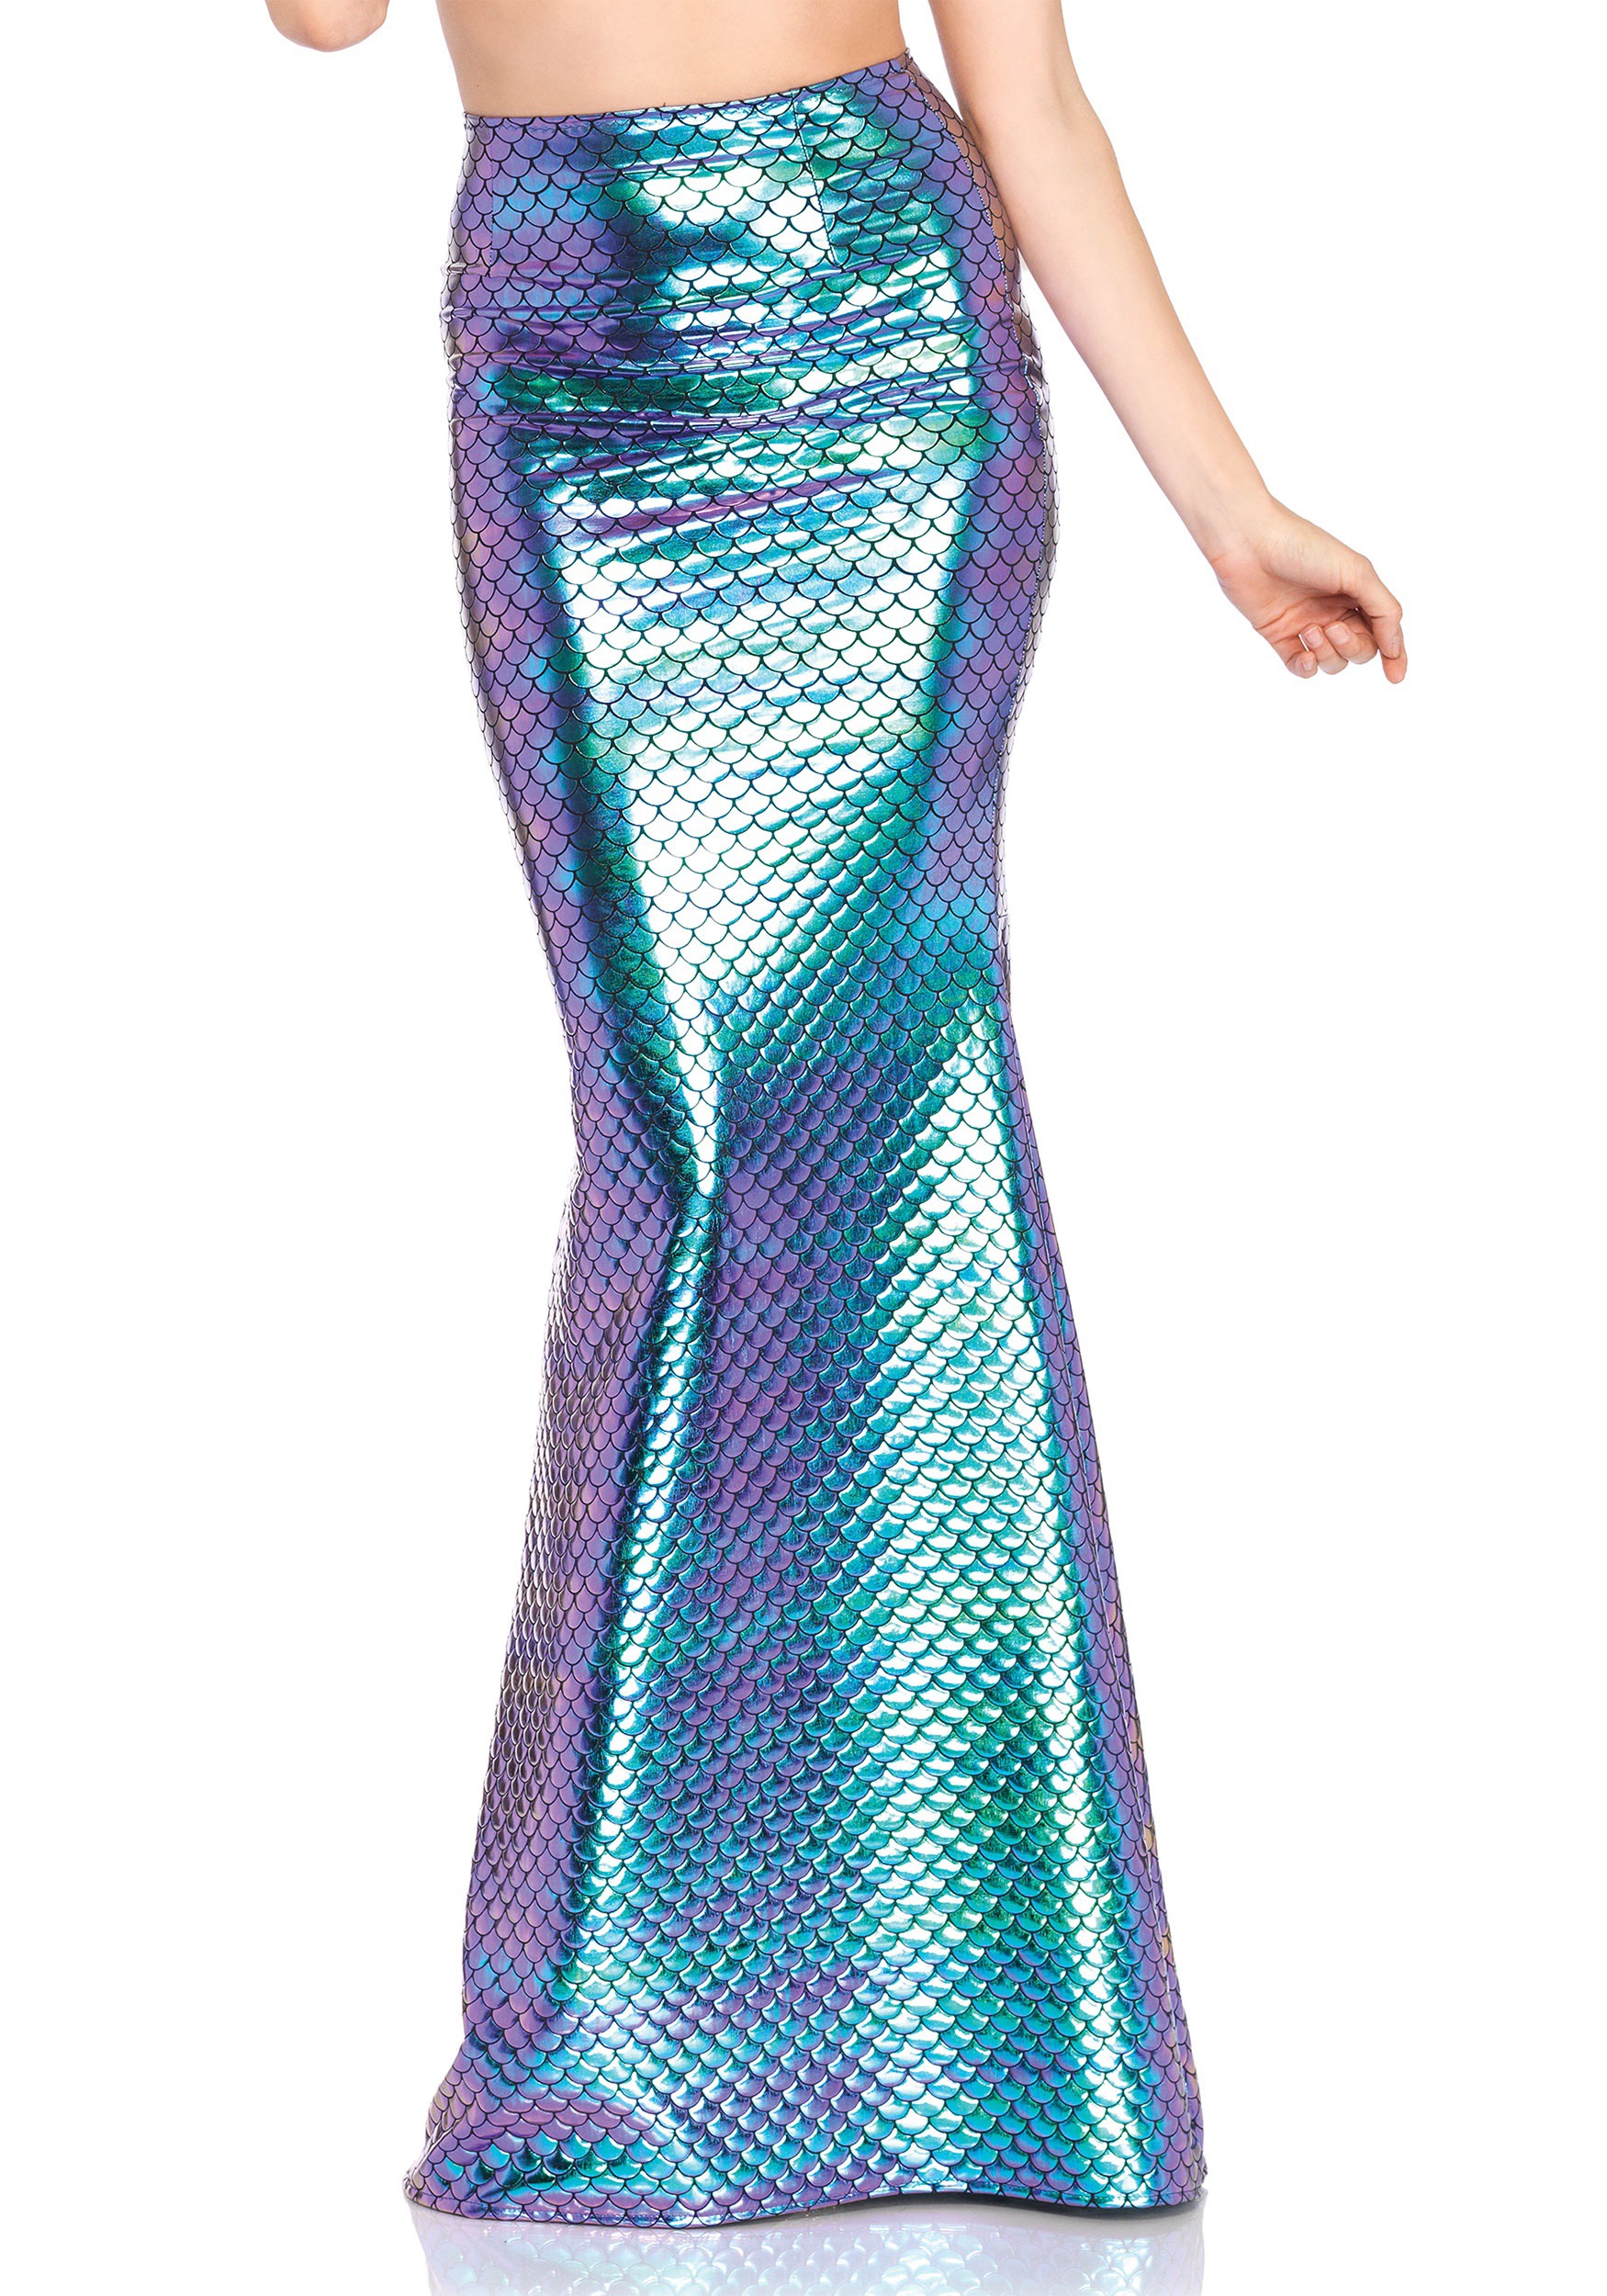 Mermaid Tail Deluxe Skirt